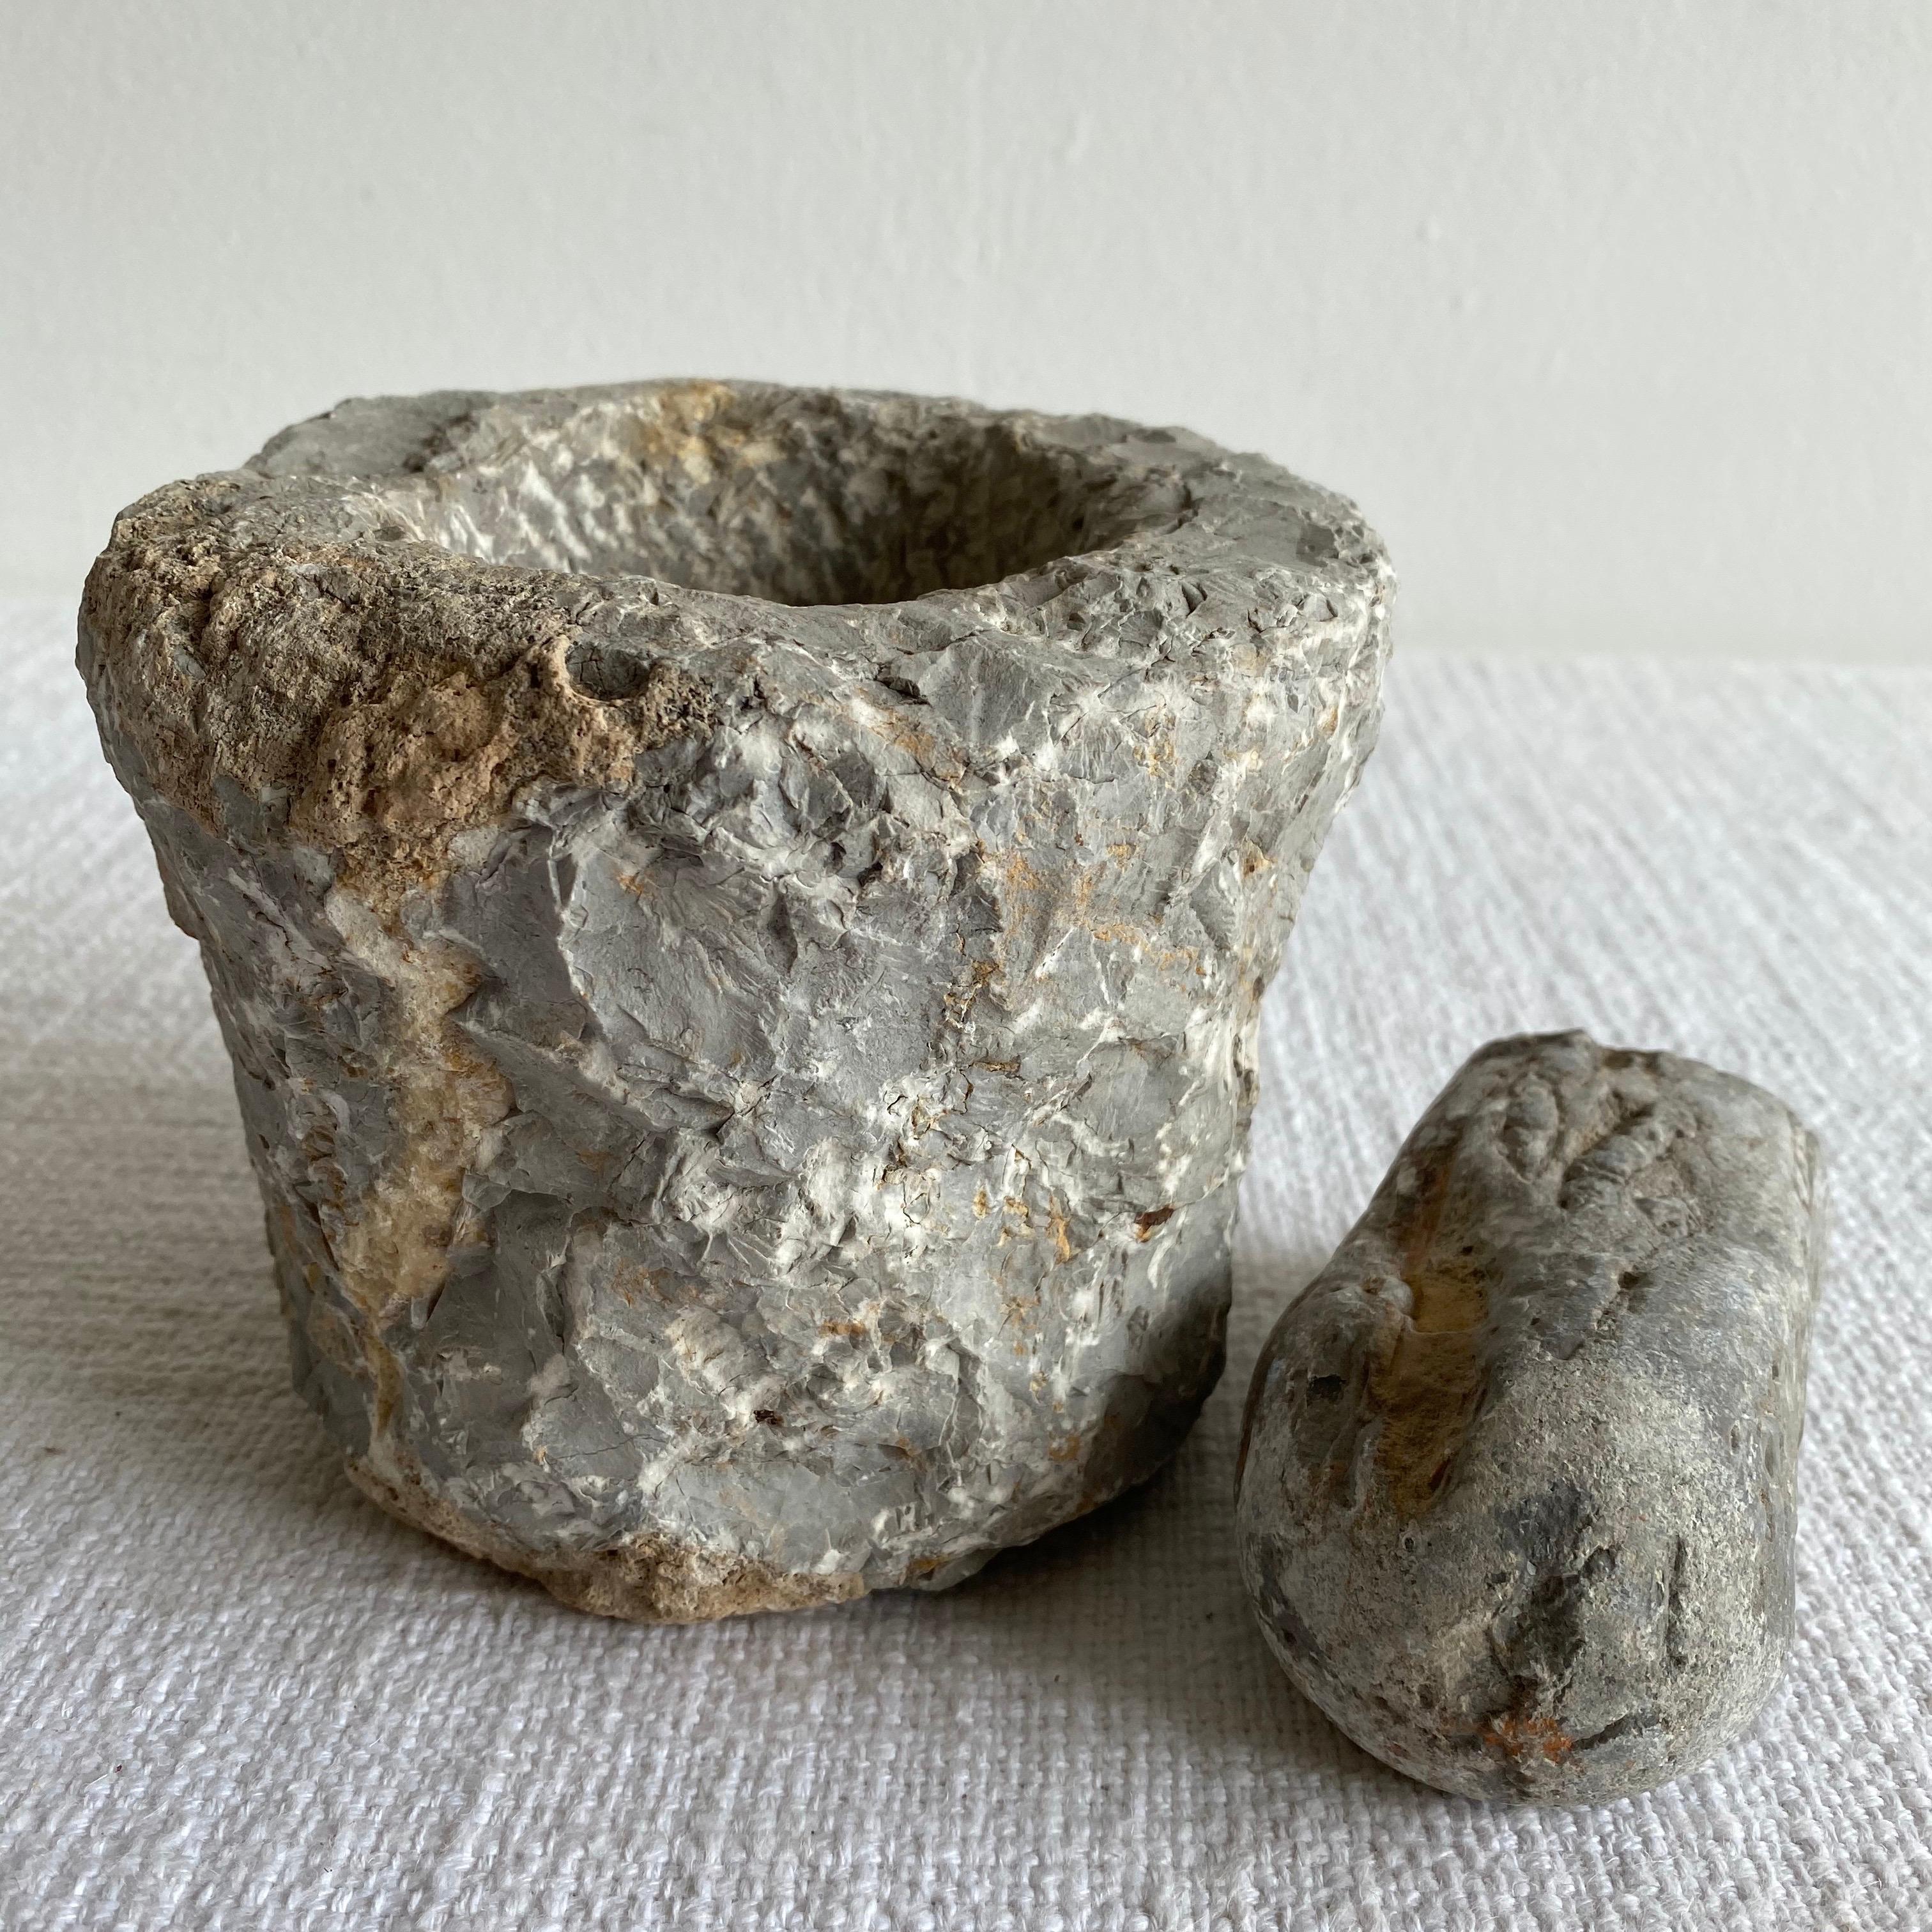 Antique stone mortar and pestle bowl set
Size: 6